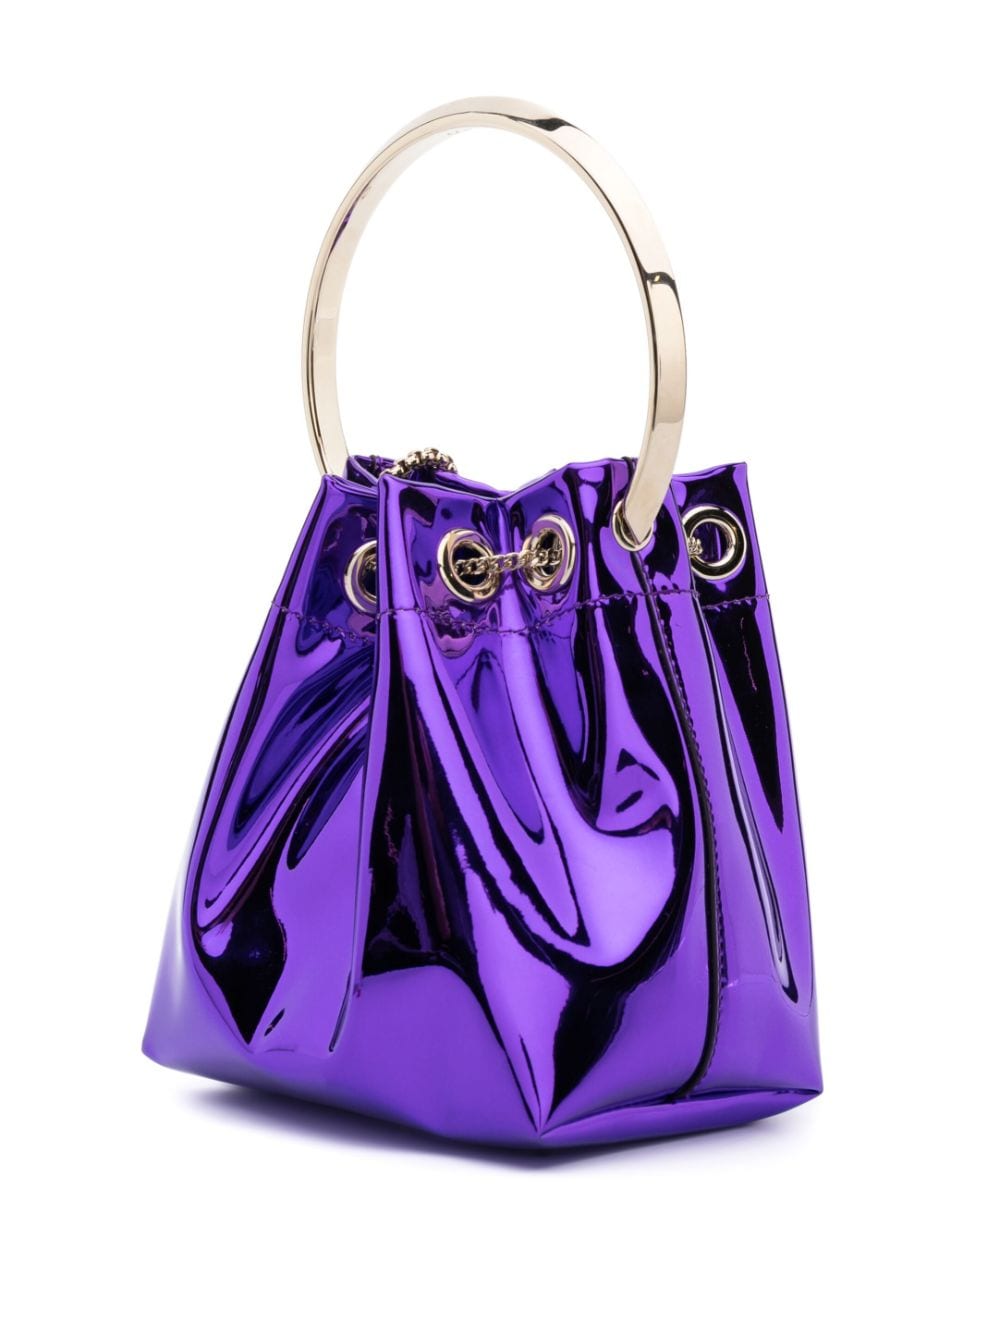 15 Feminine Looks With Patent Leather Bags - Styleoholic